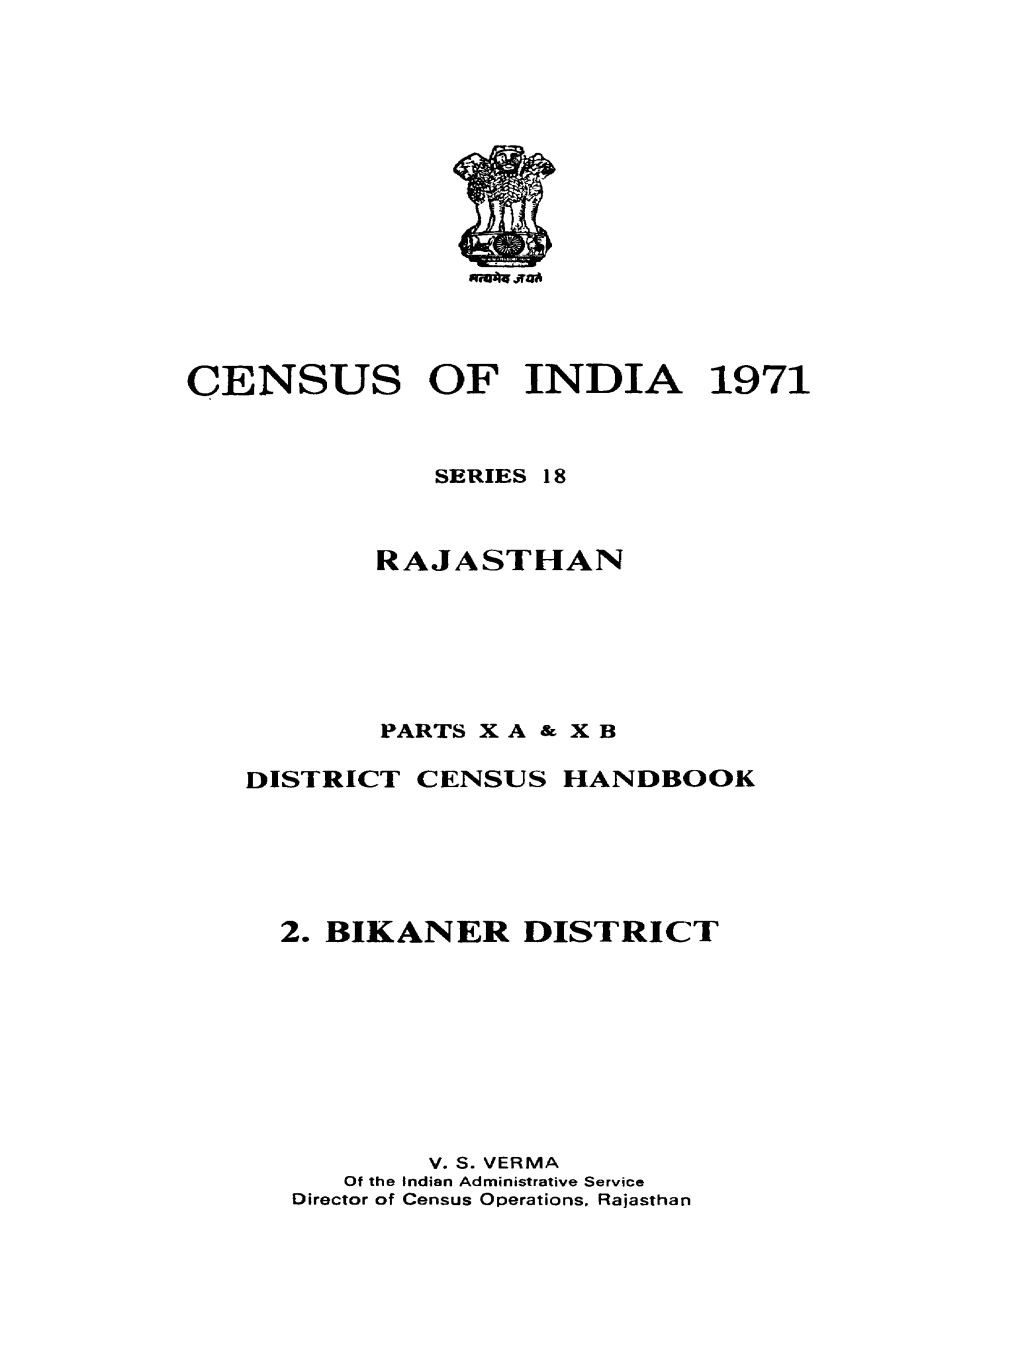 District Census Handbook, 2-Bikaner, Part X a & X B, Series-18, Rajasthan